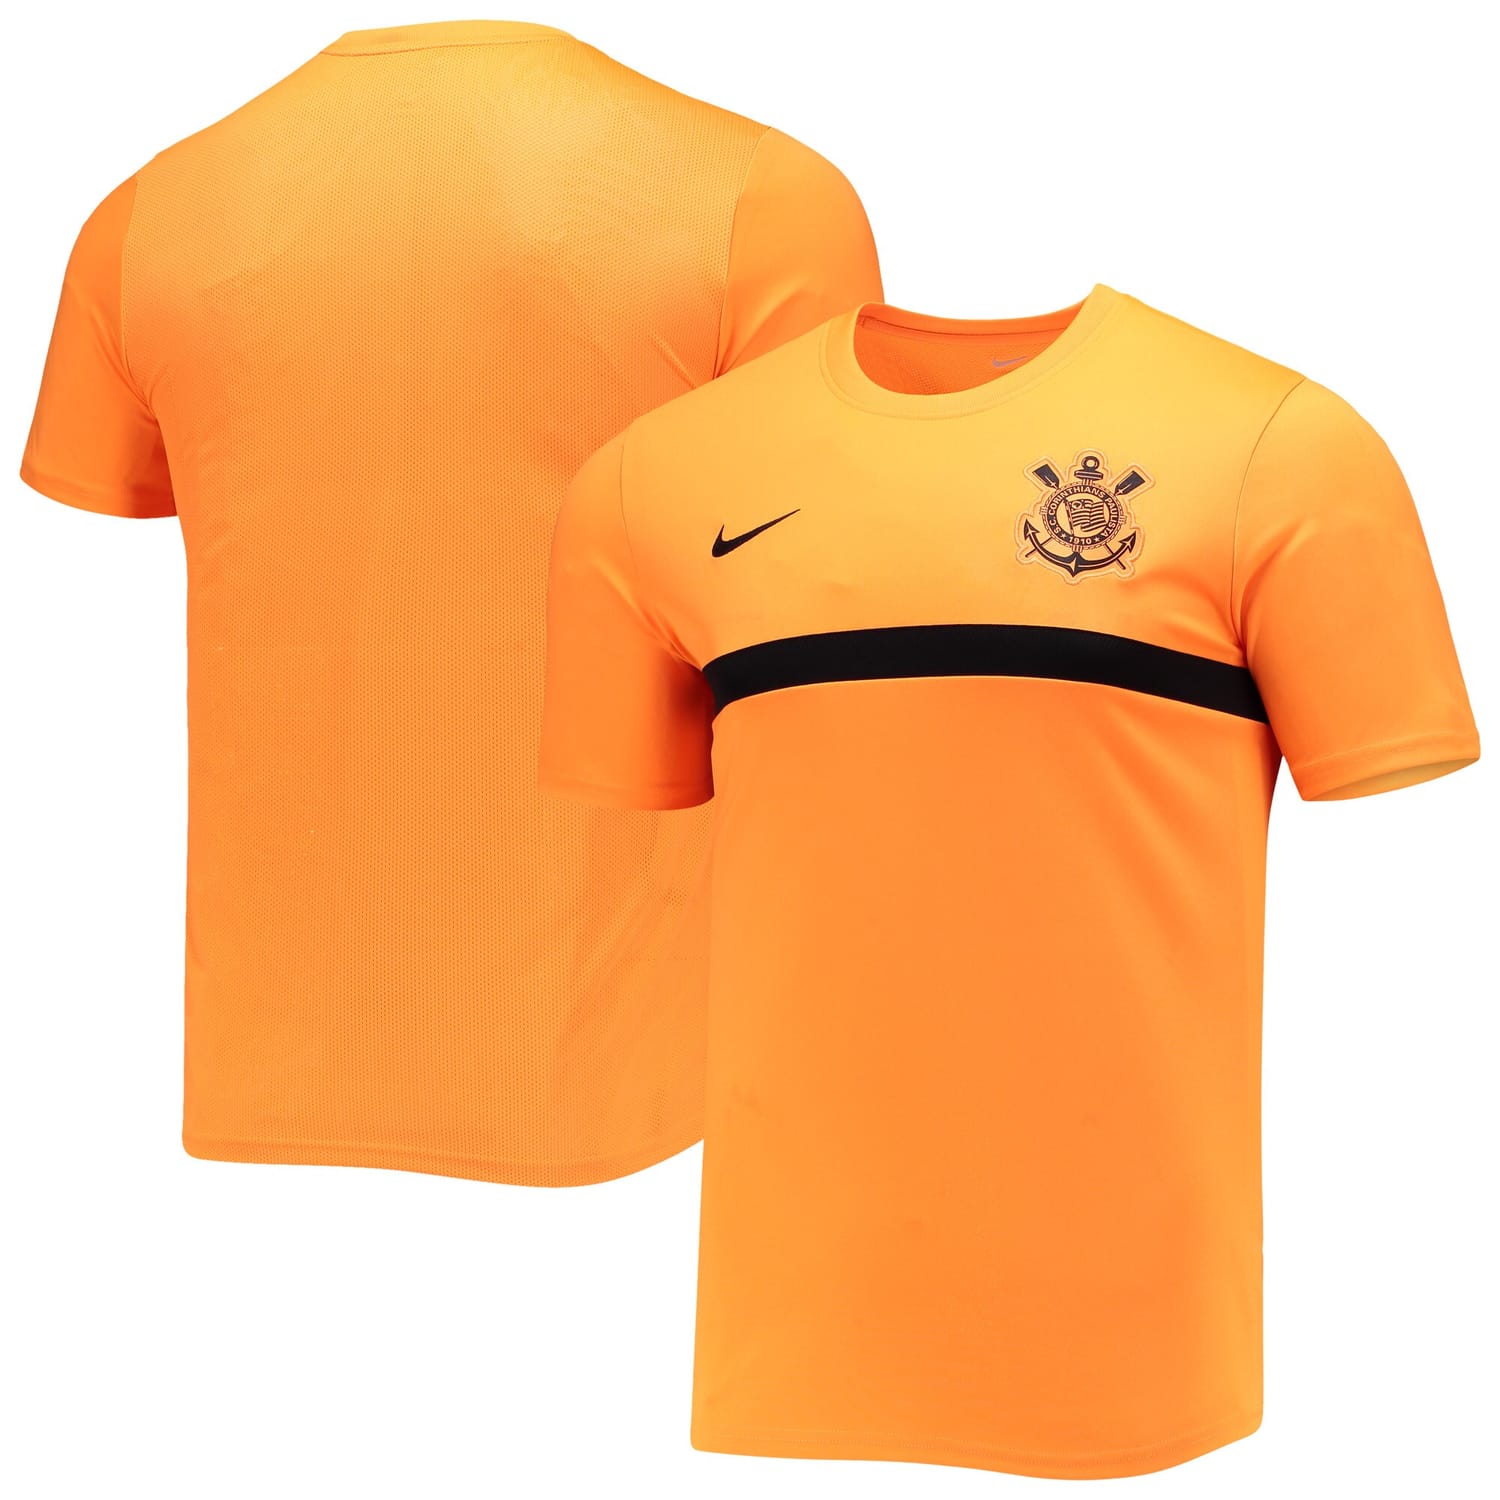 Corinthians Orange Jersey Shirt for Men